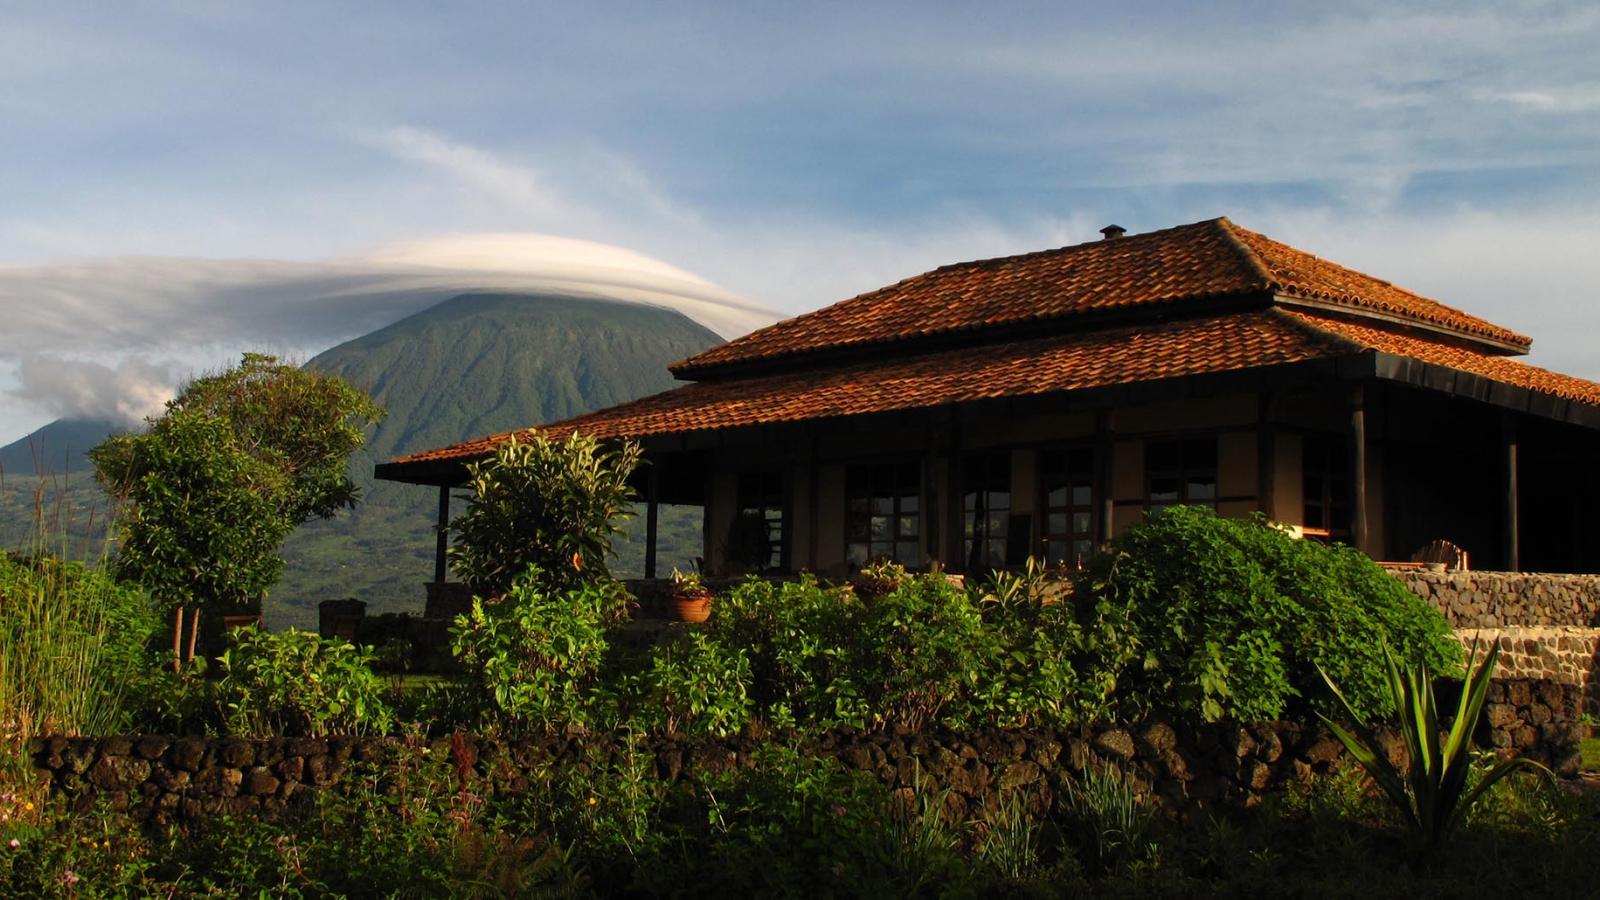 Our experience at Virunga Lodge in Rwanda + Mount Gahinga Lodge in Uganda